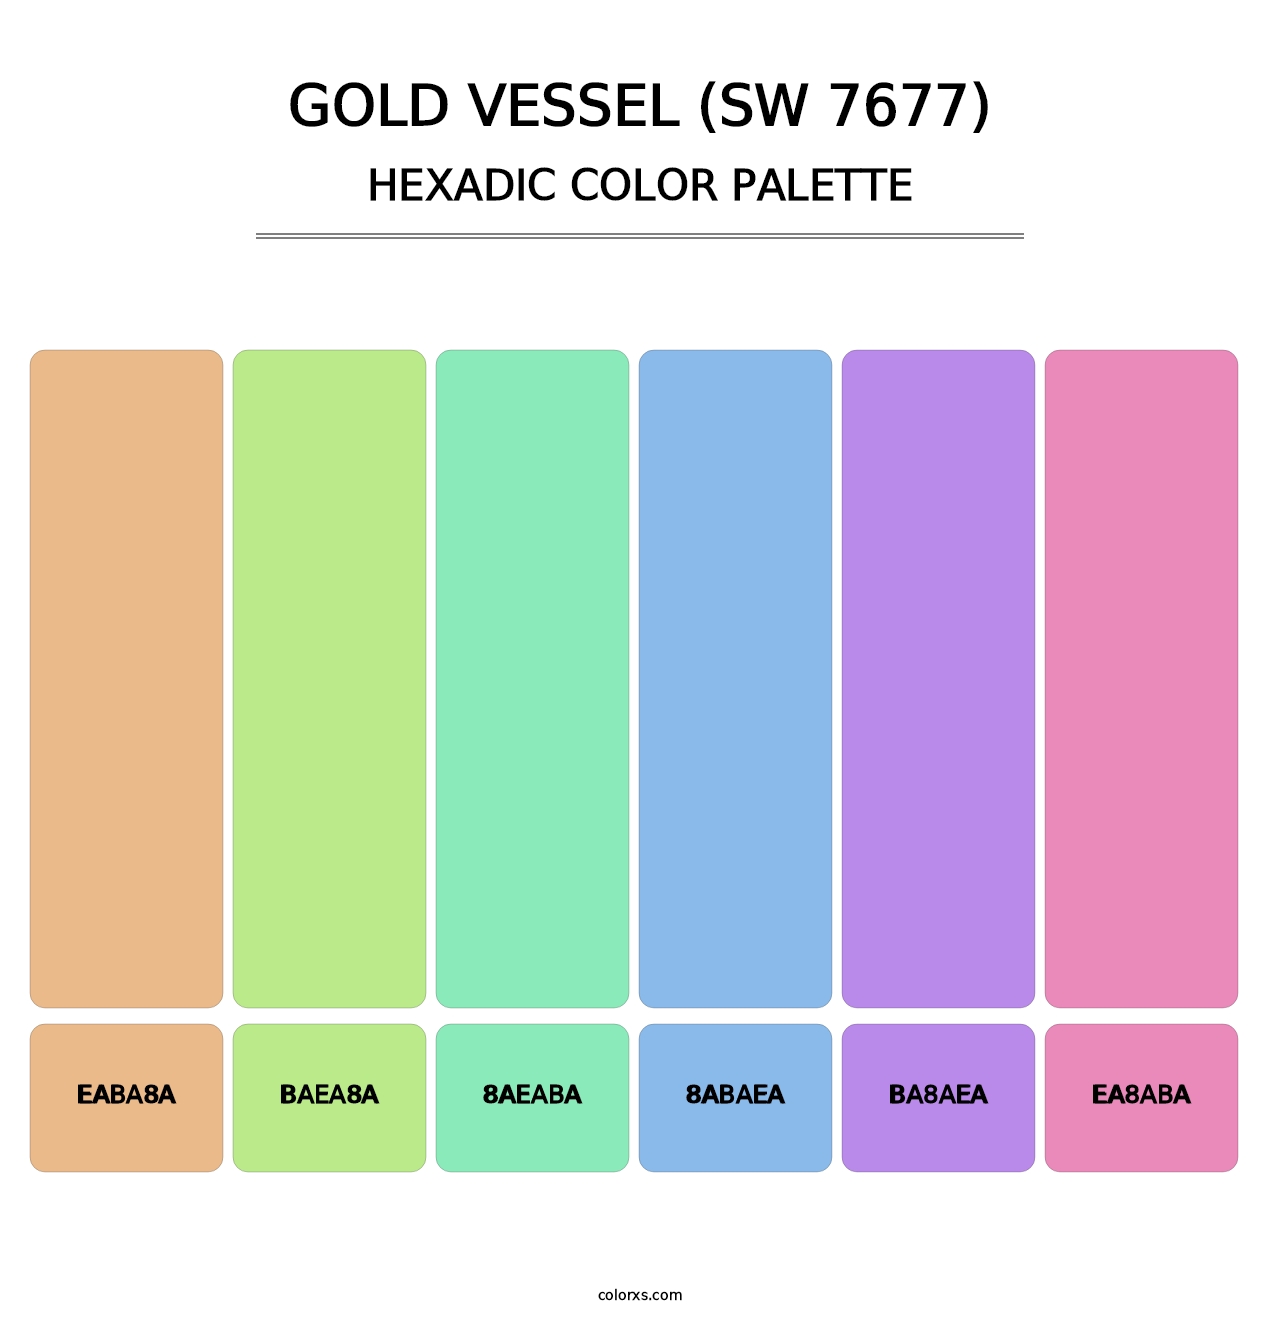 Gold Vessel (SW 7677) - Hexadic Color Palette